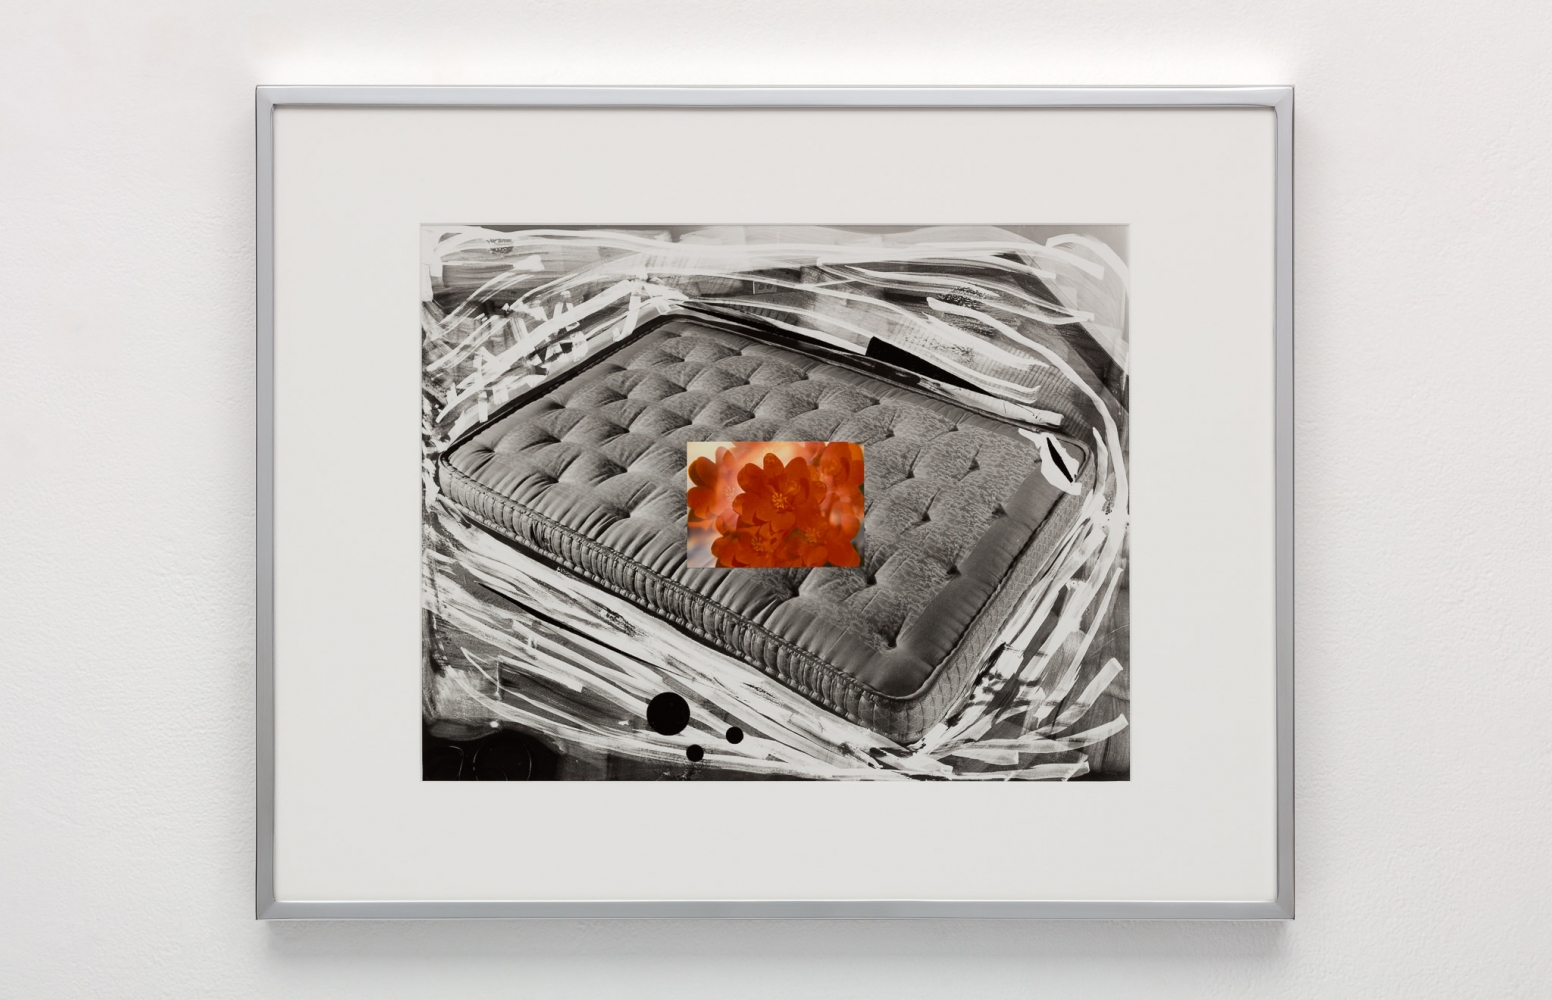 Elad Lassry

Untitled (Mattress, Flowering Quince)

2019

Silver gelatin print, C-print, aluminum frame

16 3/8 x 20 3/8 inches (41.6 x 51.8 cm) framed

Unique

EL 505

$22,000

&amp;nbsp;

INQUIRE